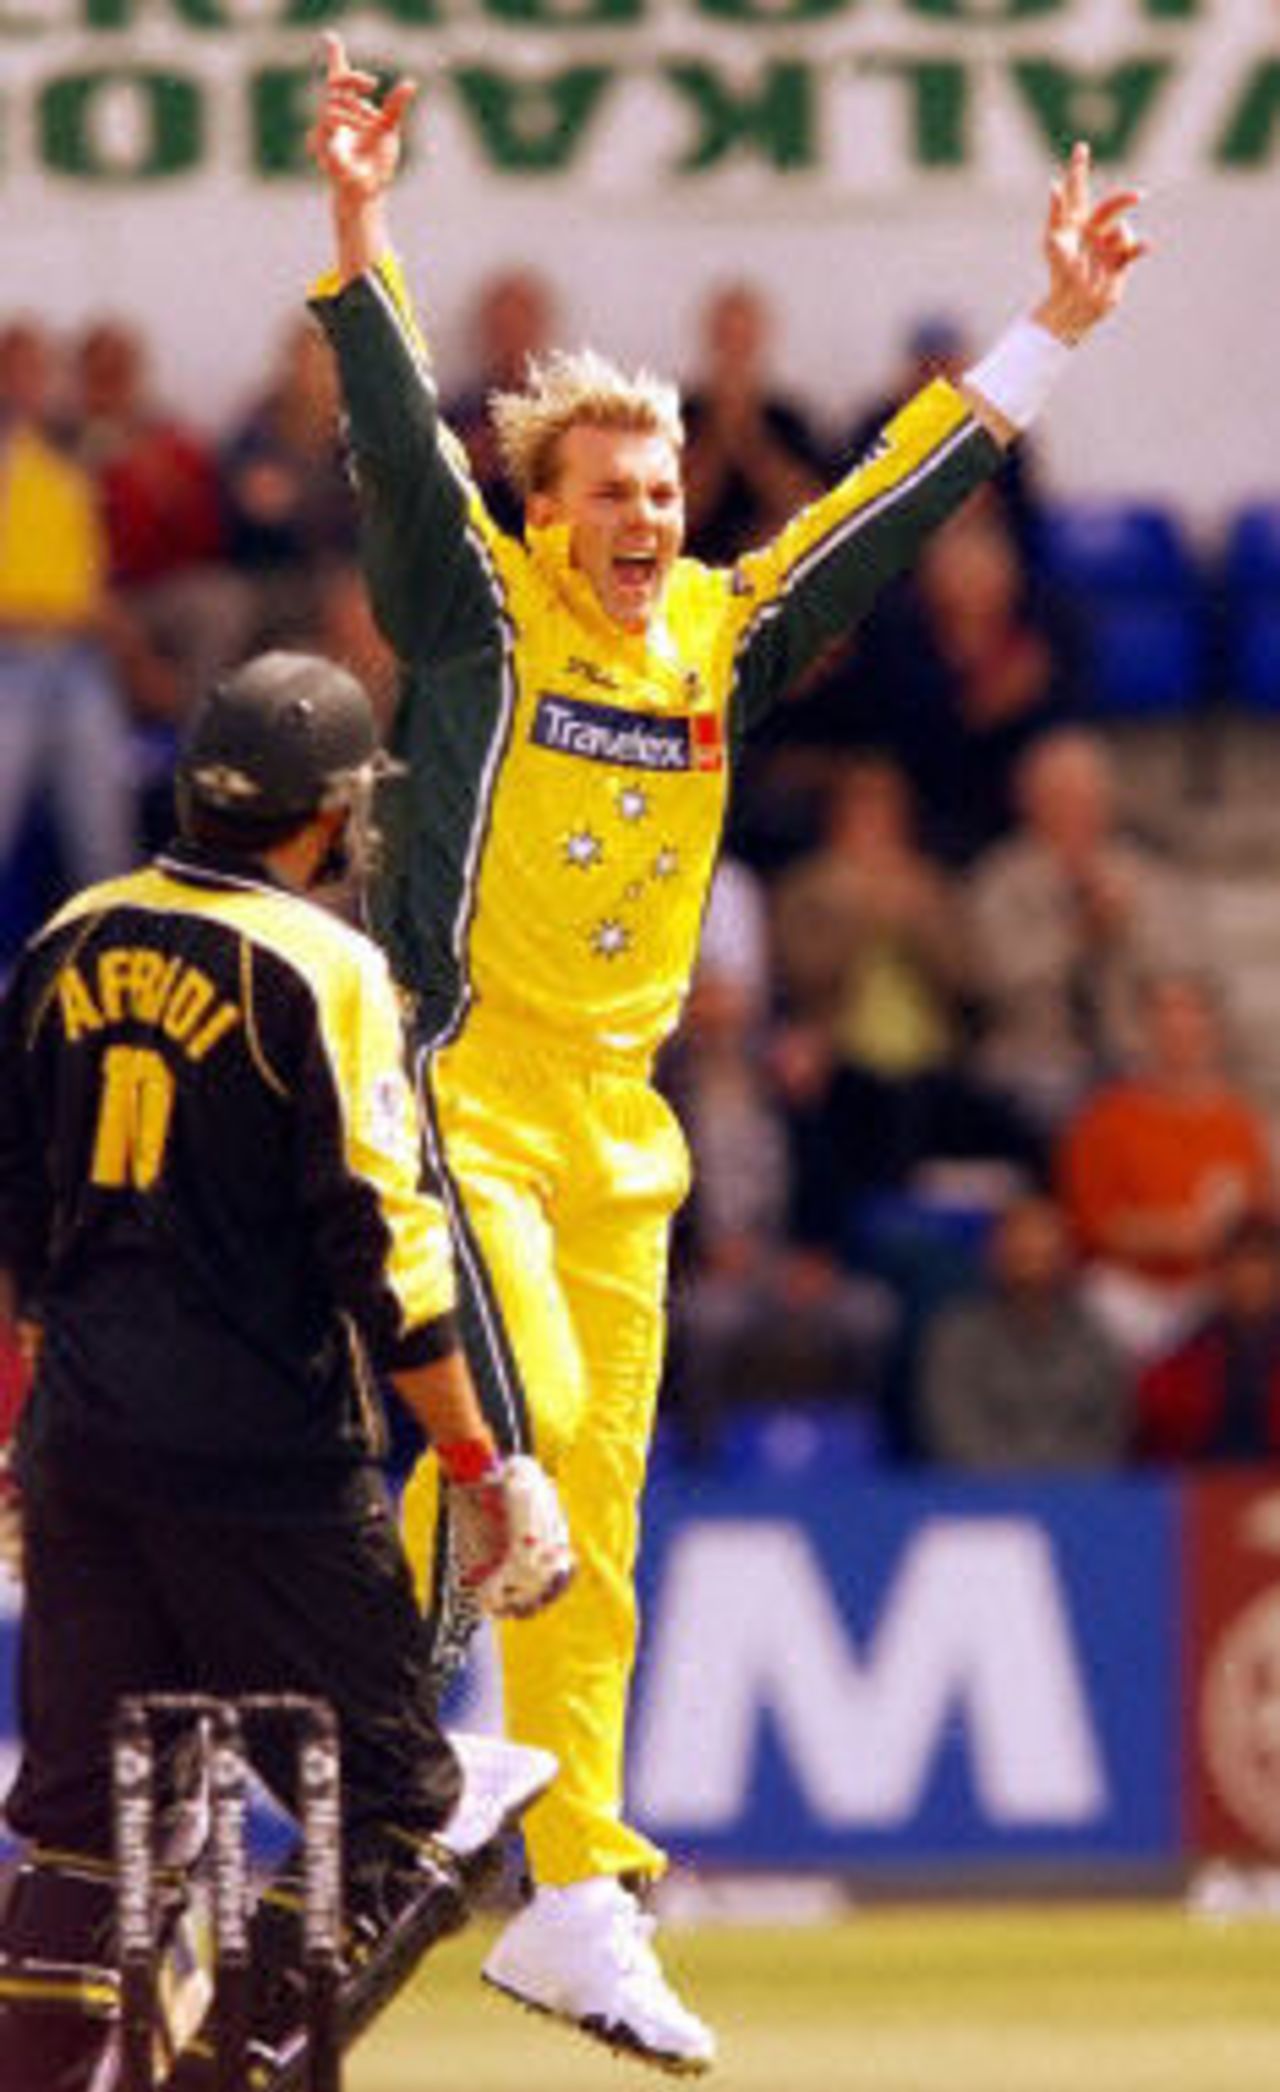 Brett Lee jumps for joy after having Shahd Afridi caught, 2nd ODI at Cardiff, 9 June 2001